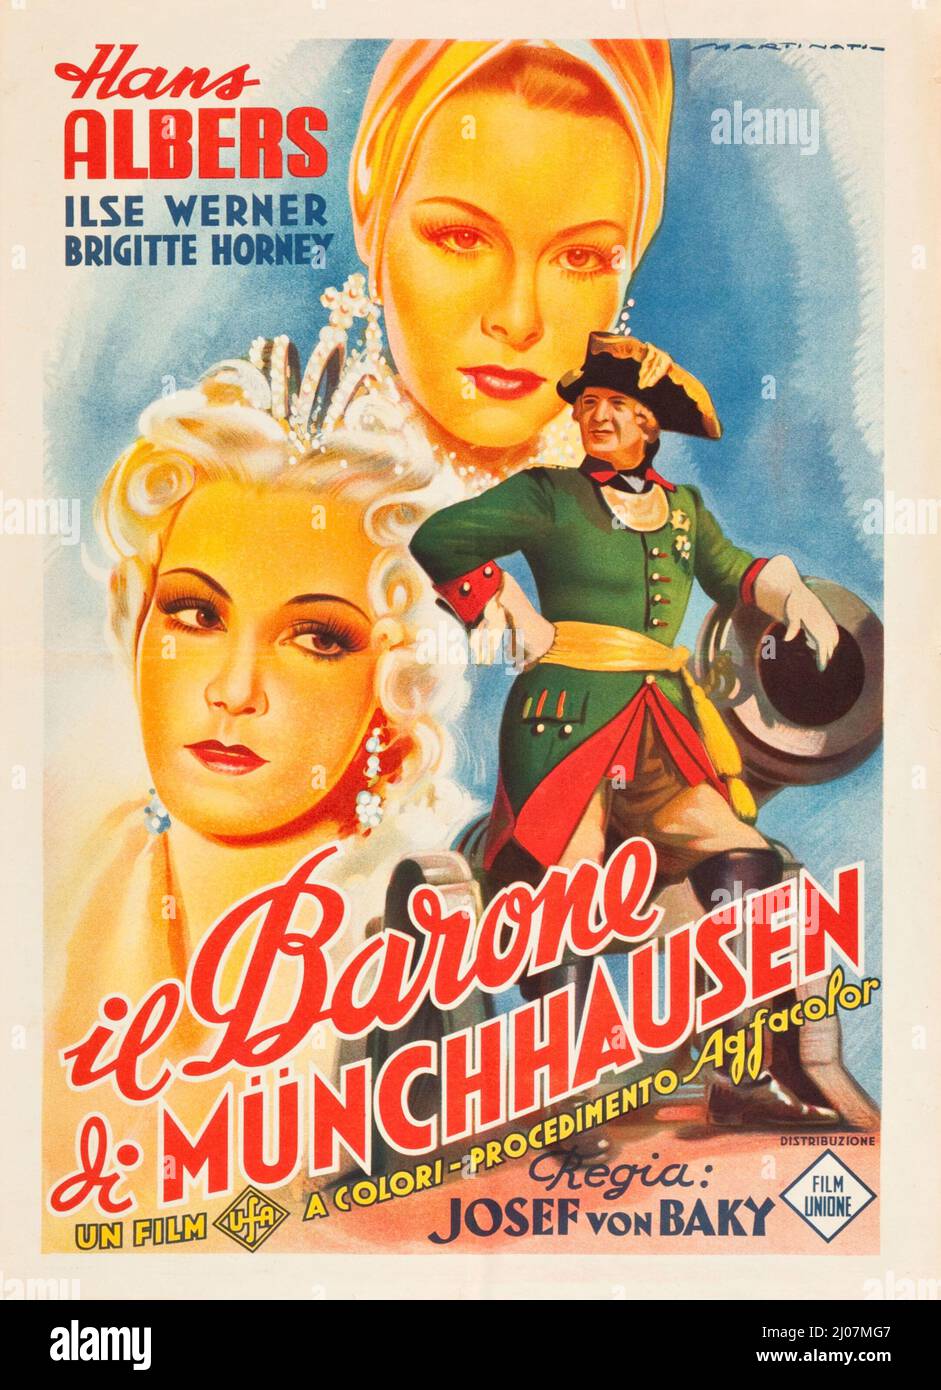 MUNCHHAUSEN (1943), directed by JOSEF VON BAKY. Credit: U.F.A / Album Stock Photo